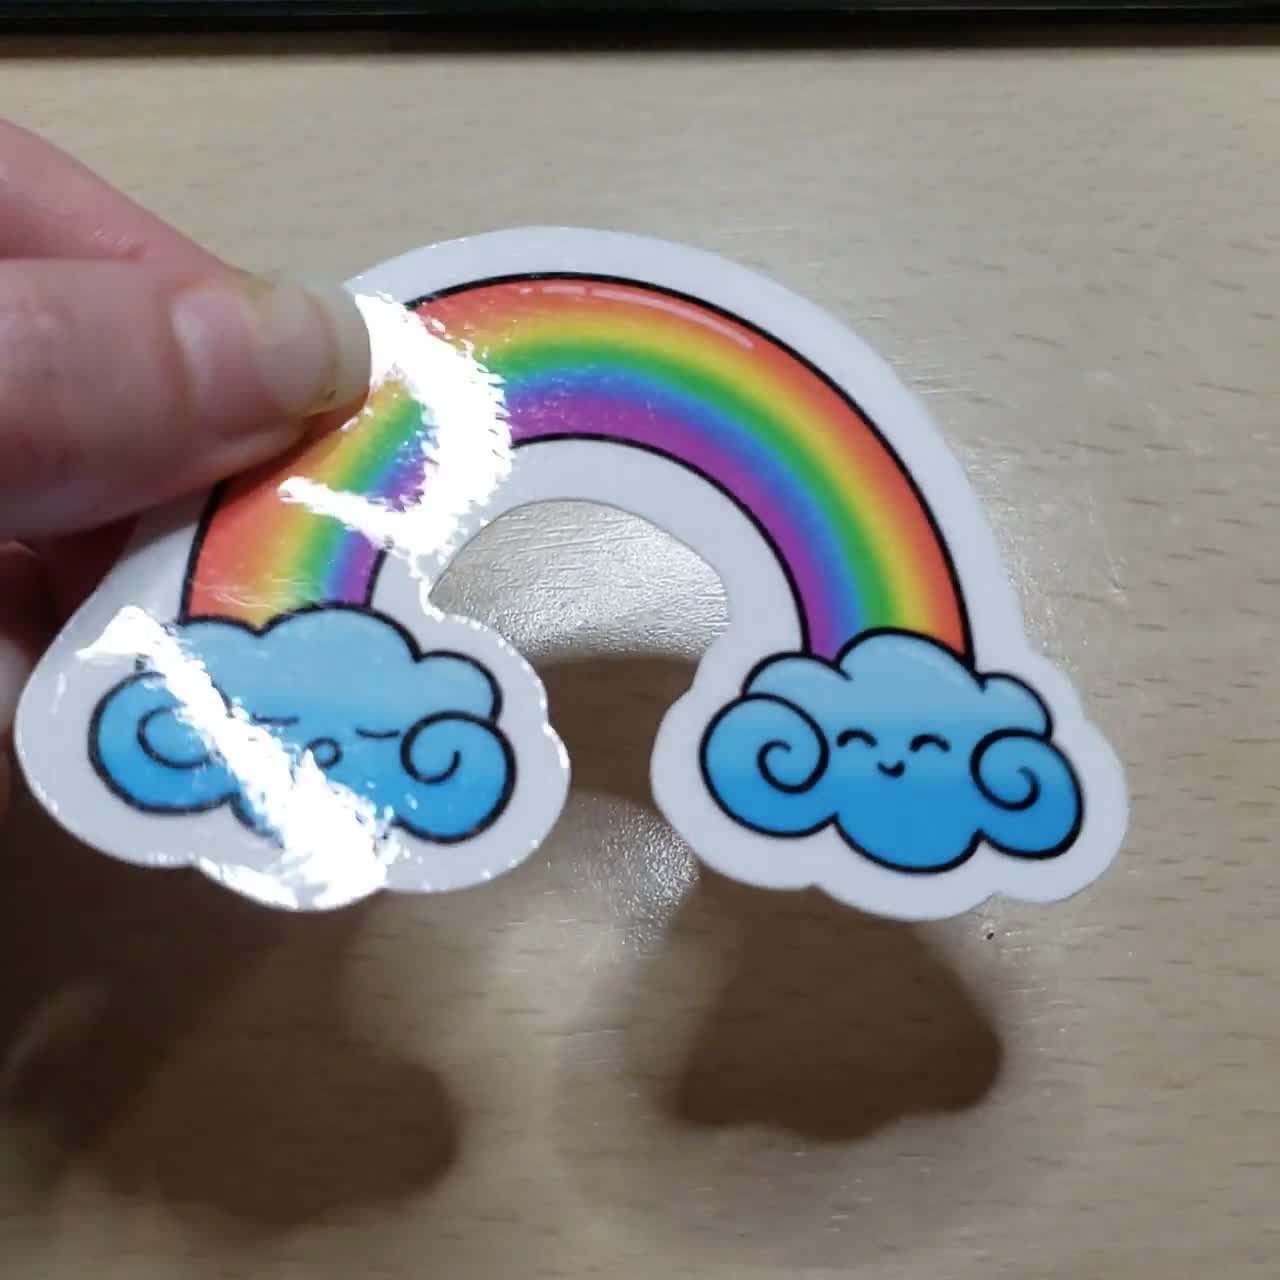 Boho Stickers, Boho Rainbow